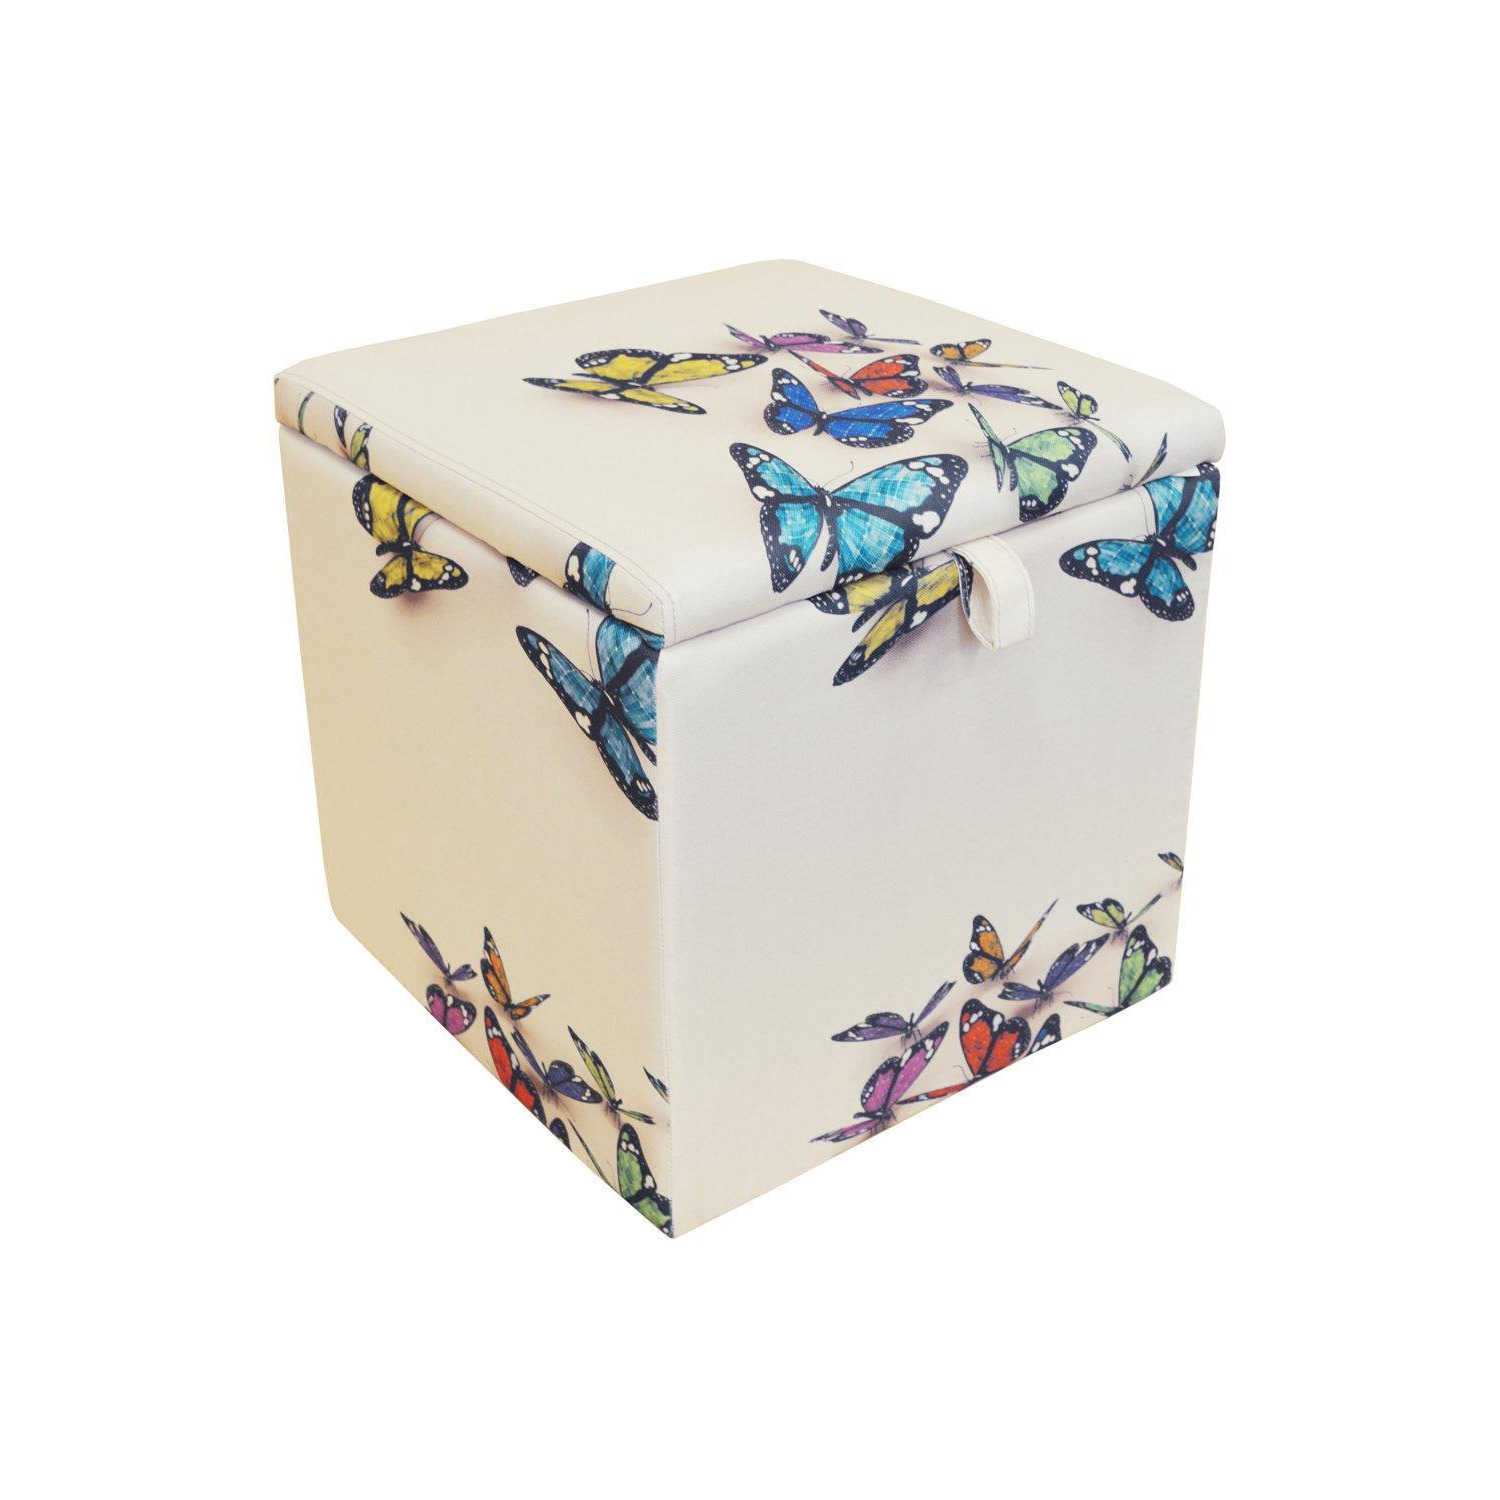 'Butterfly' - Square Storage Ottoman Stool  Blanket Box Cube - Cream  Multi - image 1